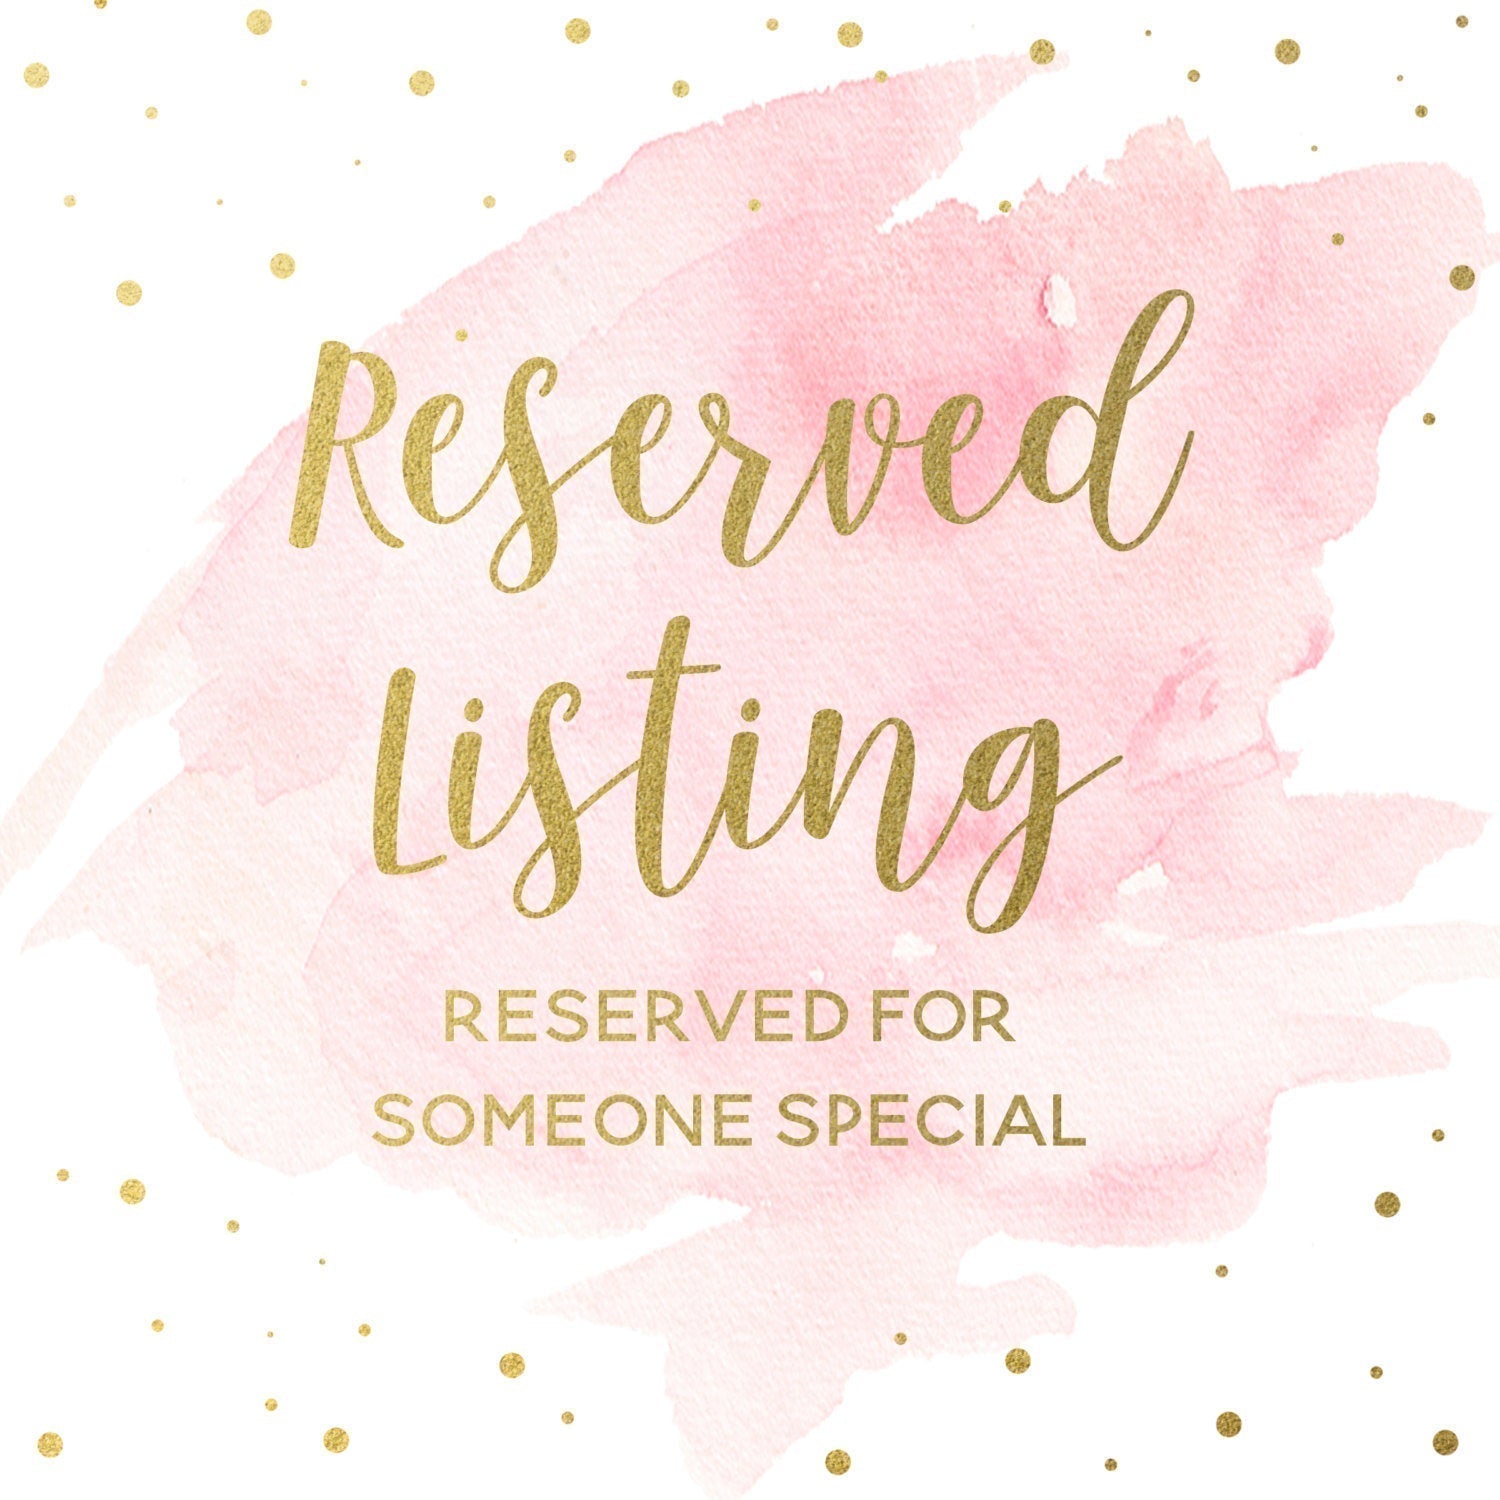 Reserved Listing - Whitney K